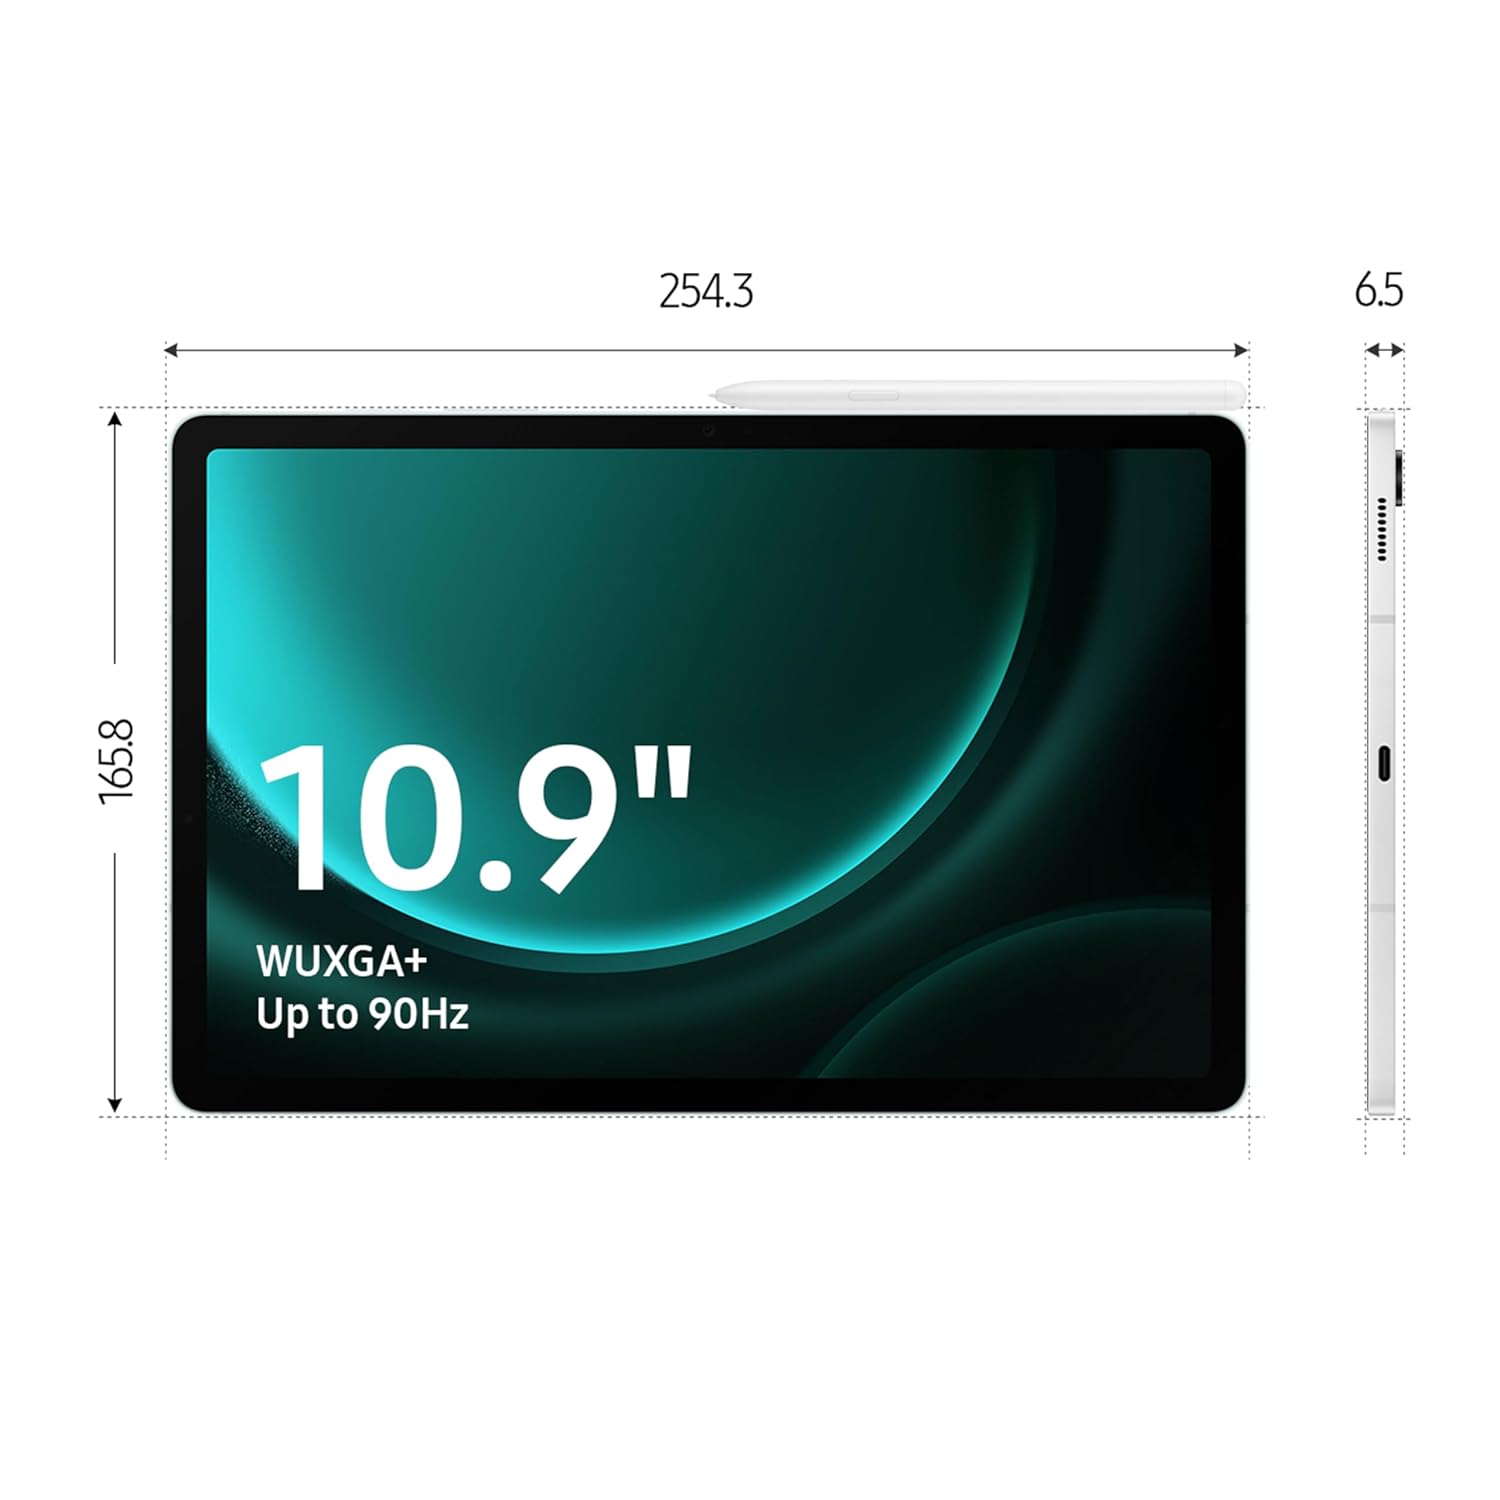 Samsung Galaxy Tab S9 FE 27.69 cm (10.9 inch) Display, RAM 8 GB, ROM 256 GB Expandable, S Pen in-Box, WiFi+5G, IP68 Tablet Mahajan Electronics Online